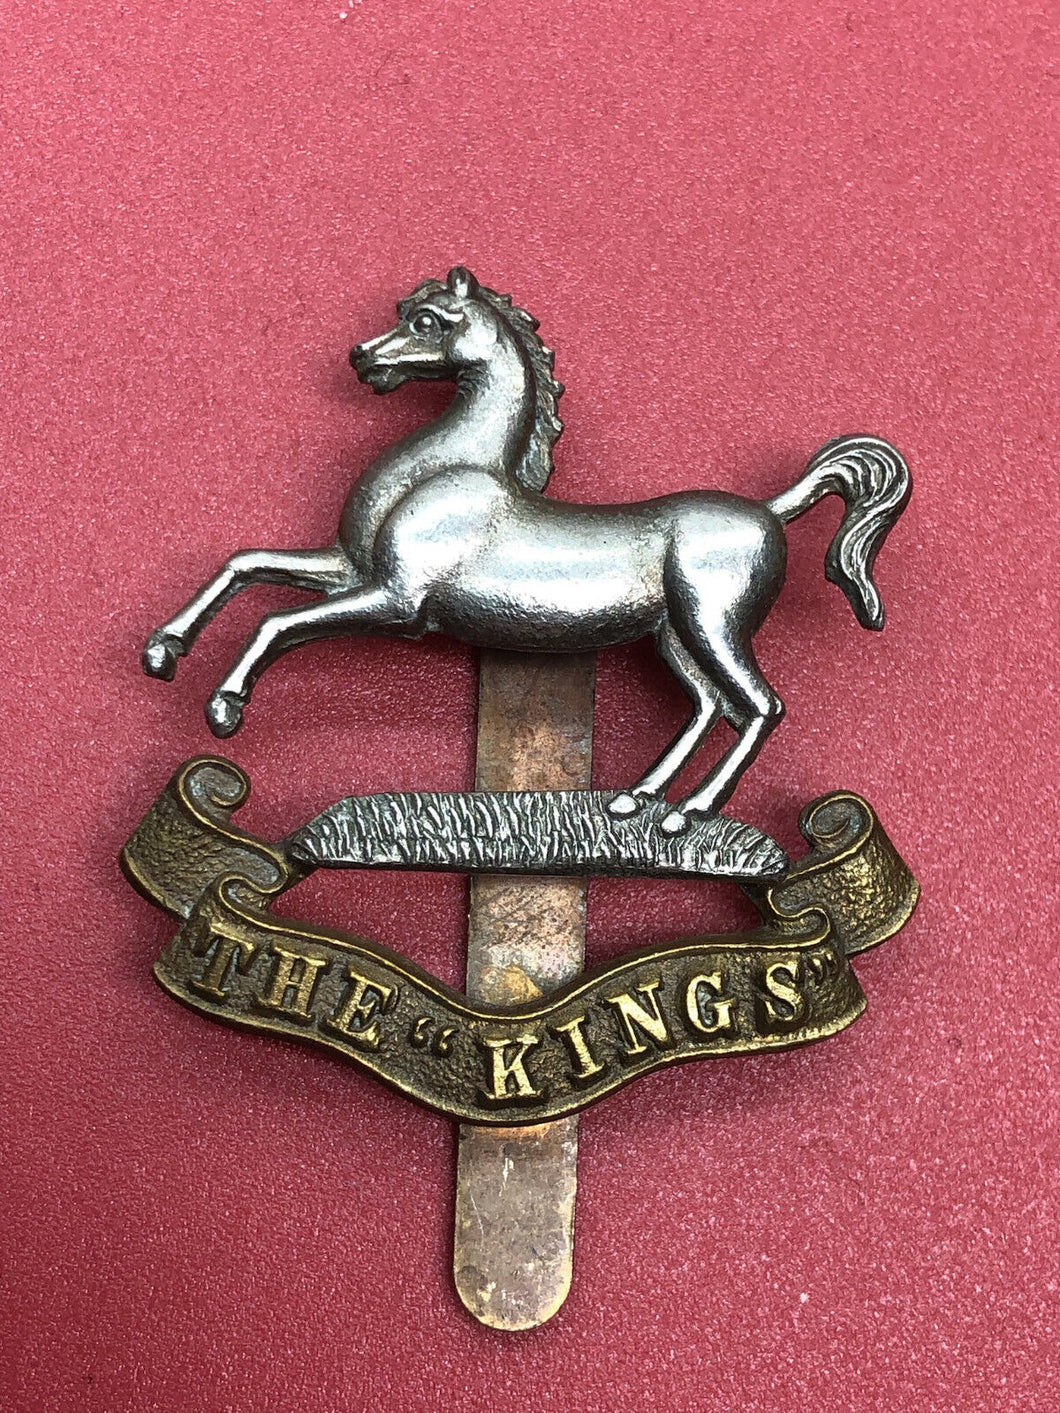 Original WW2 British Army Cap Badge - The Kings Liverpool Regiment